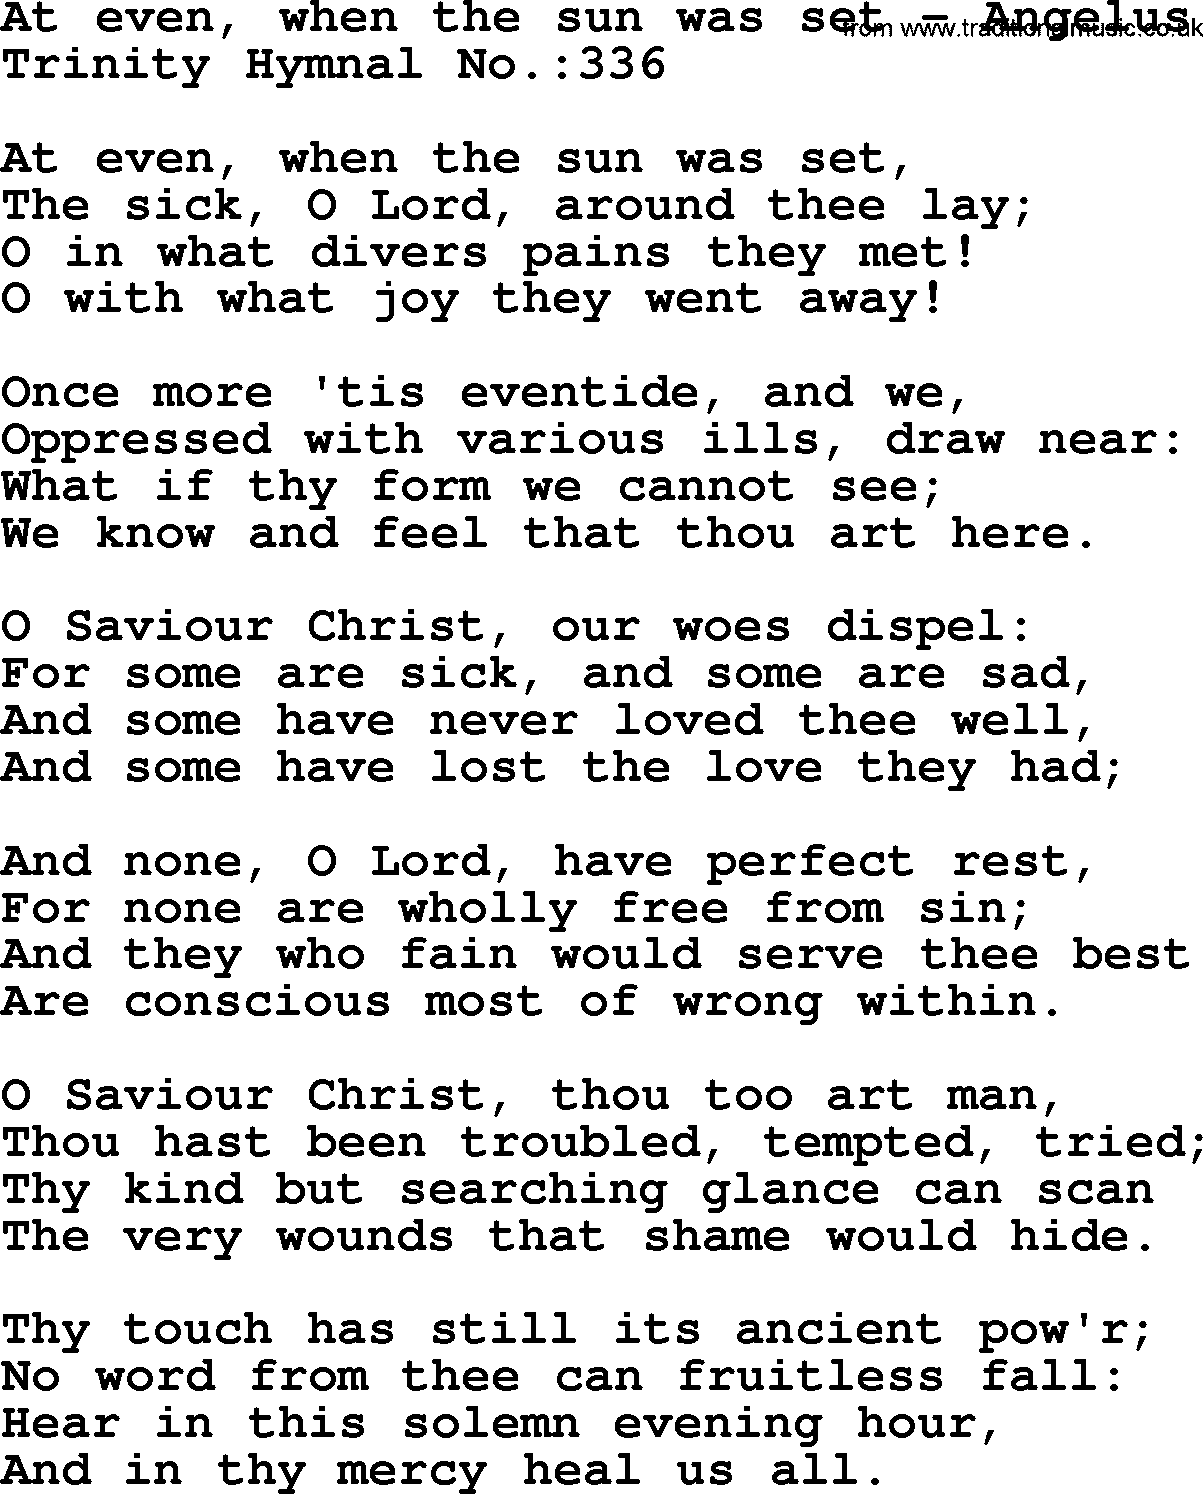 Trinity Hymnal Hymn: At Even, When The Sun Was Set--Angelus, lyrics with midi music